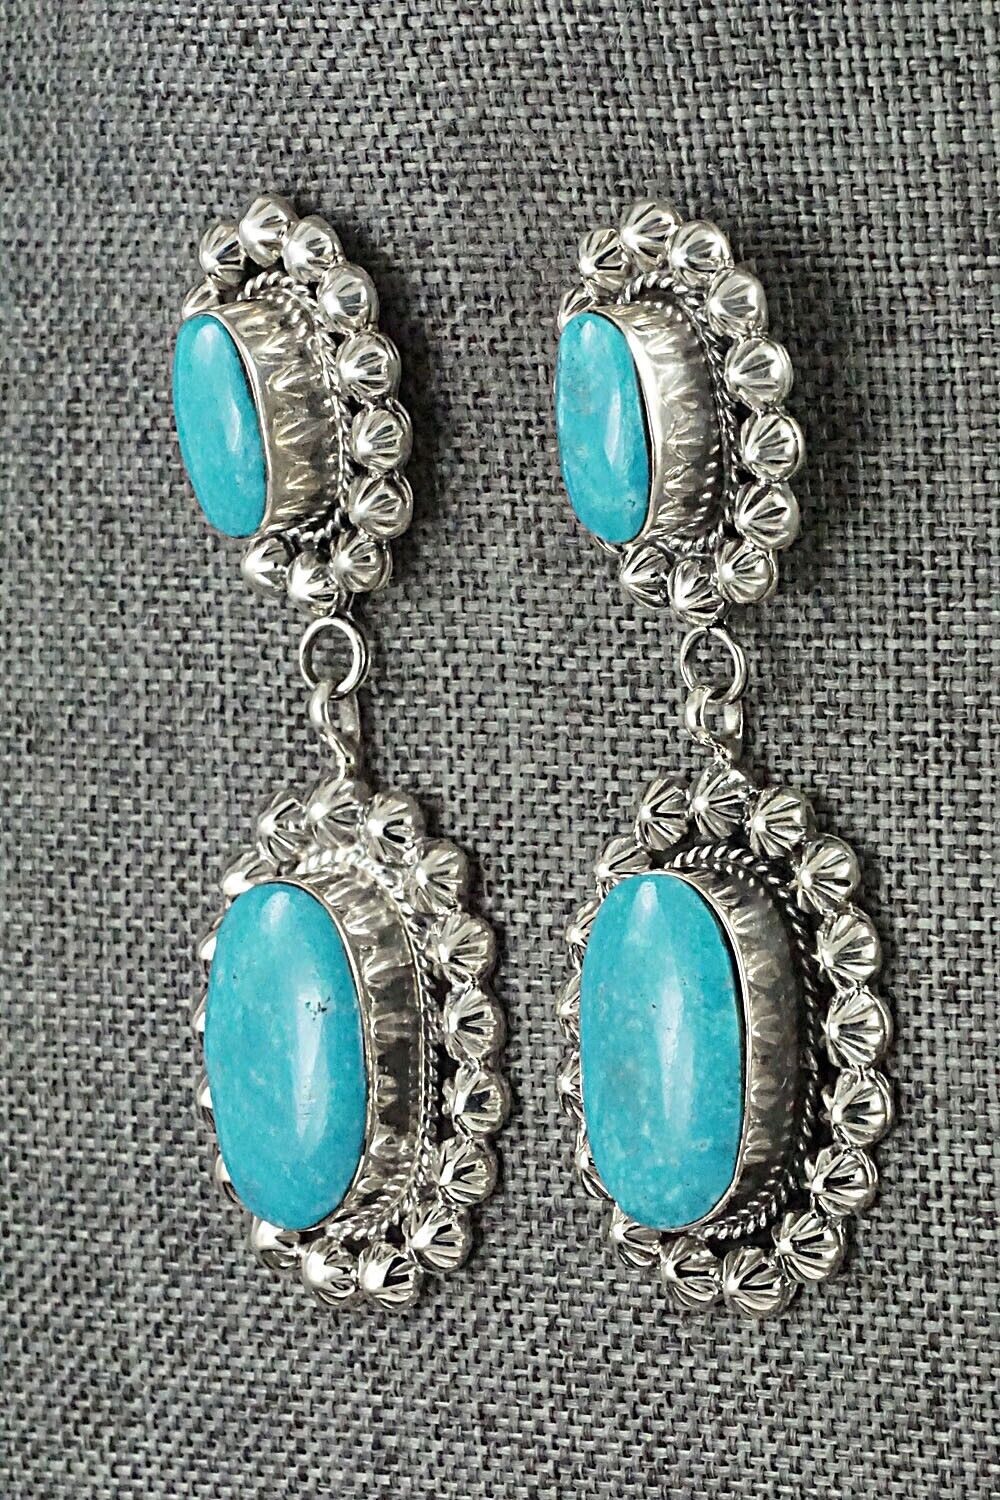 Turquoise & Sterling Silver Earrings - Loretta Delgarito